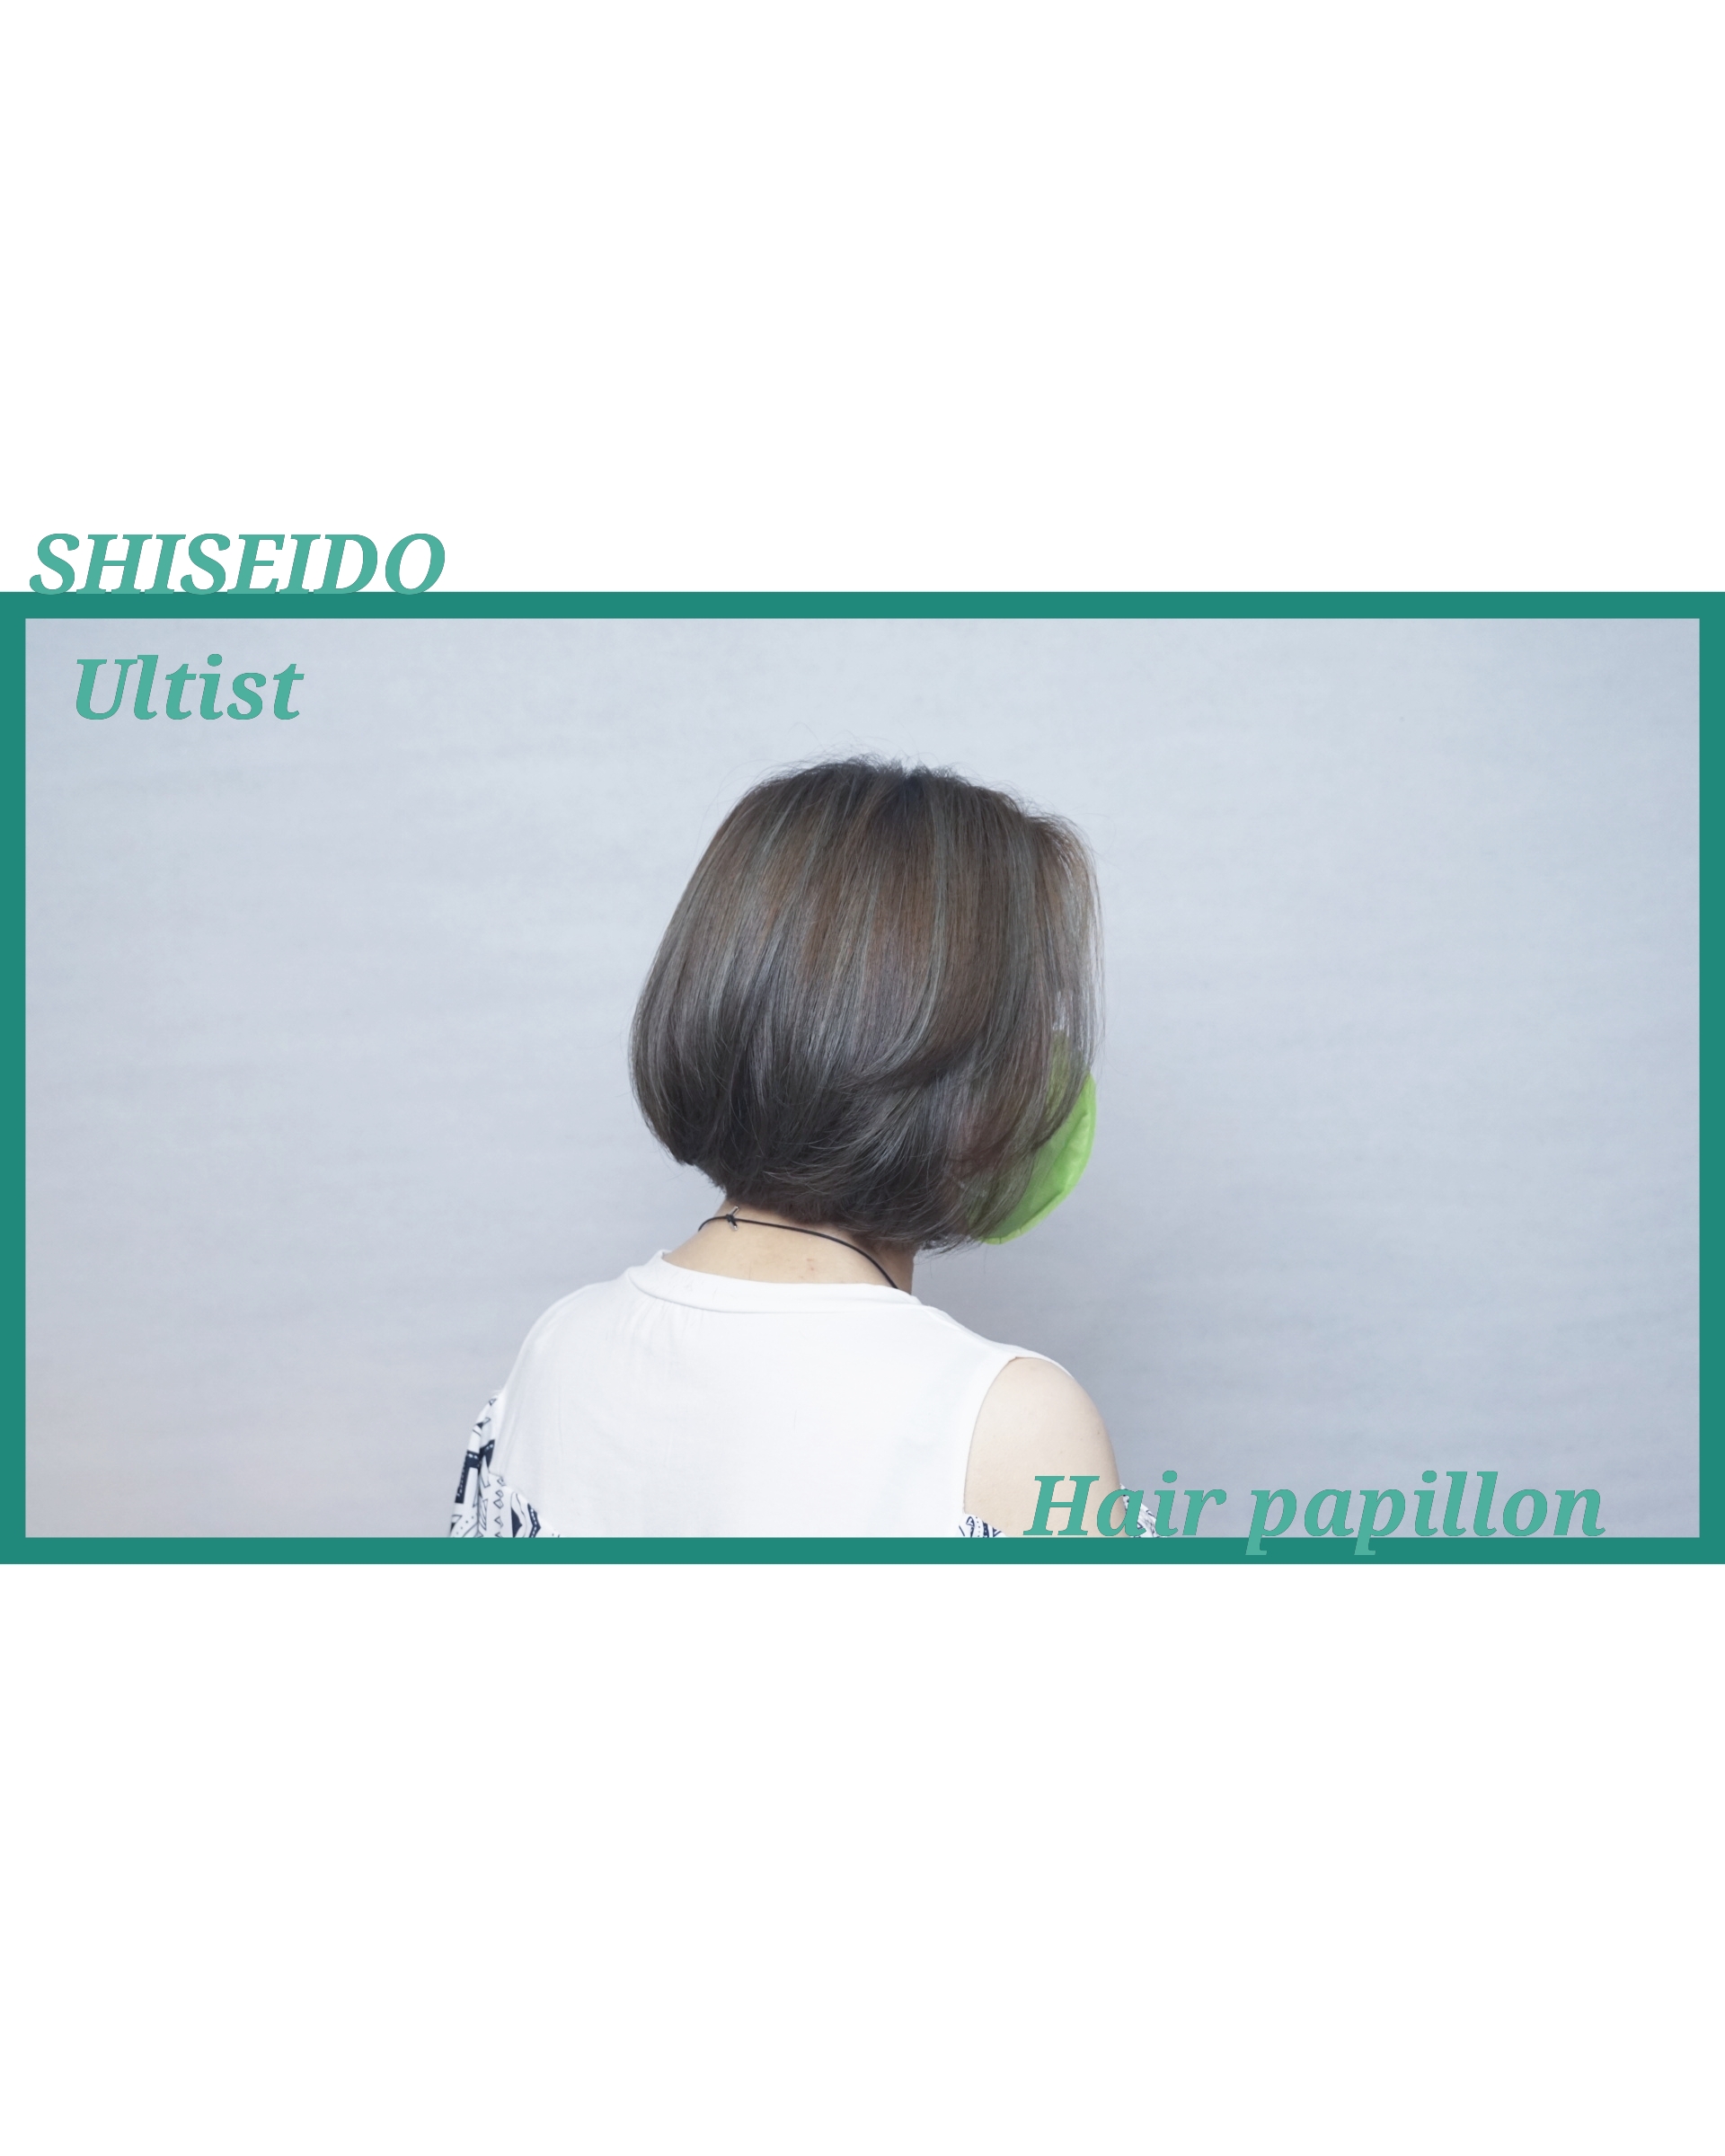 作品參考 / 最新消息:shiseido ultist